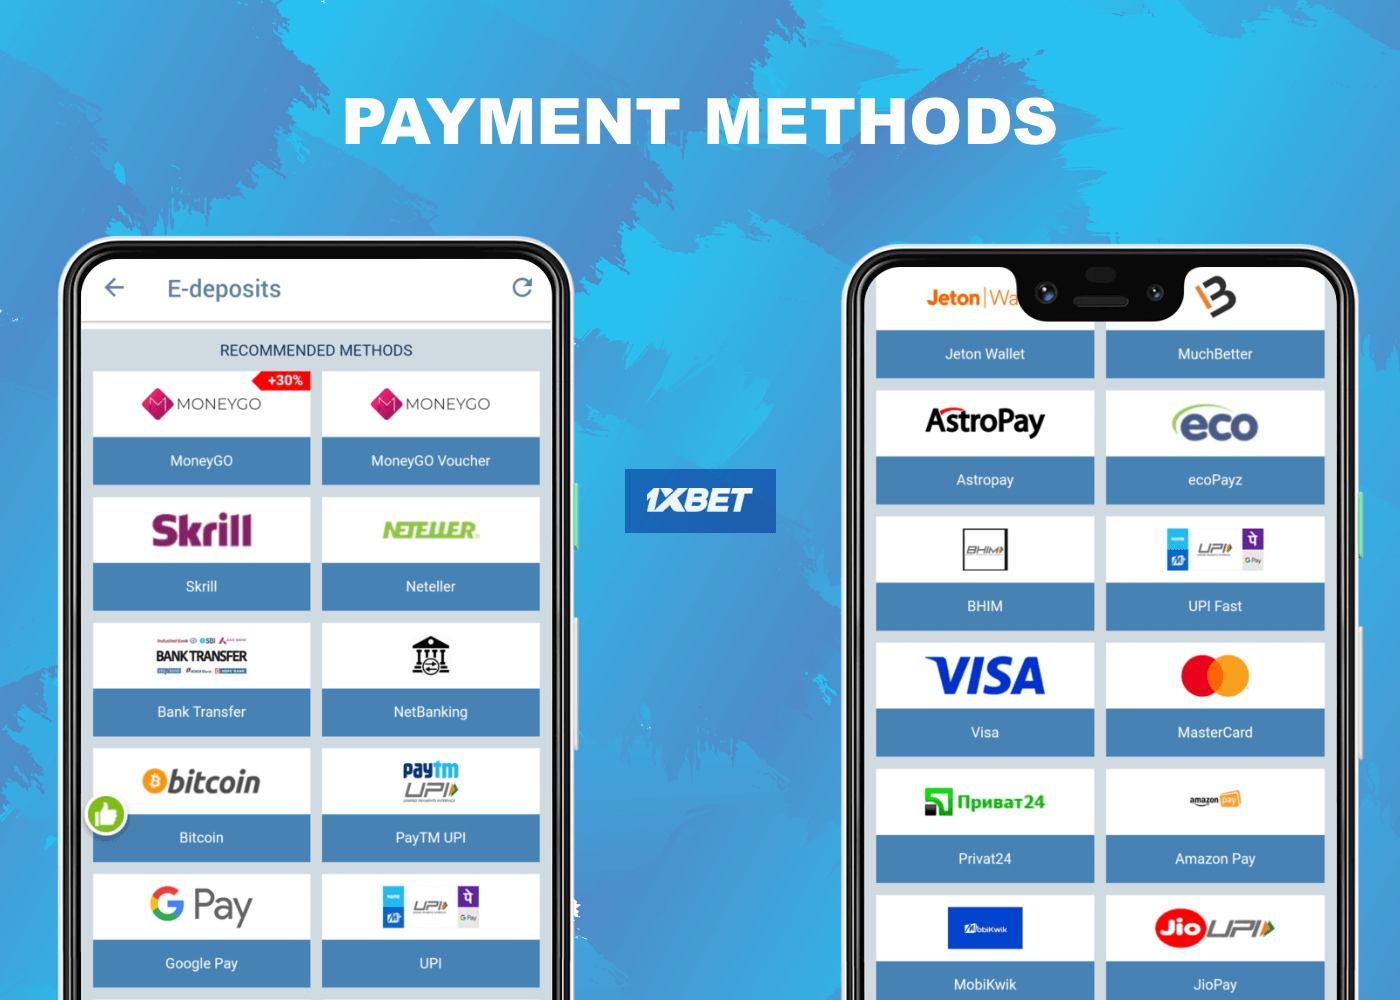 1xbet app Métodos de pagamento para depósito e saque